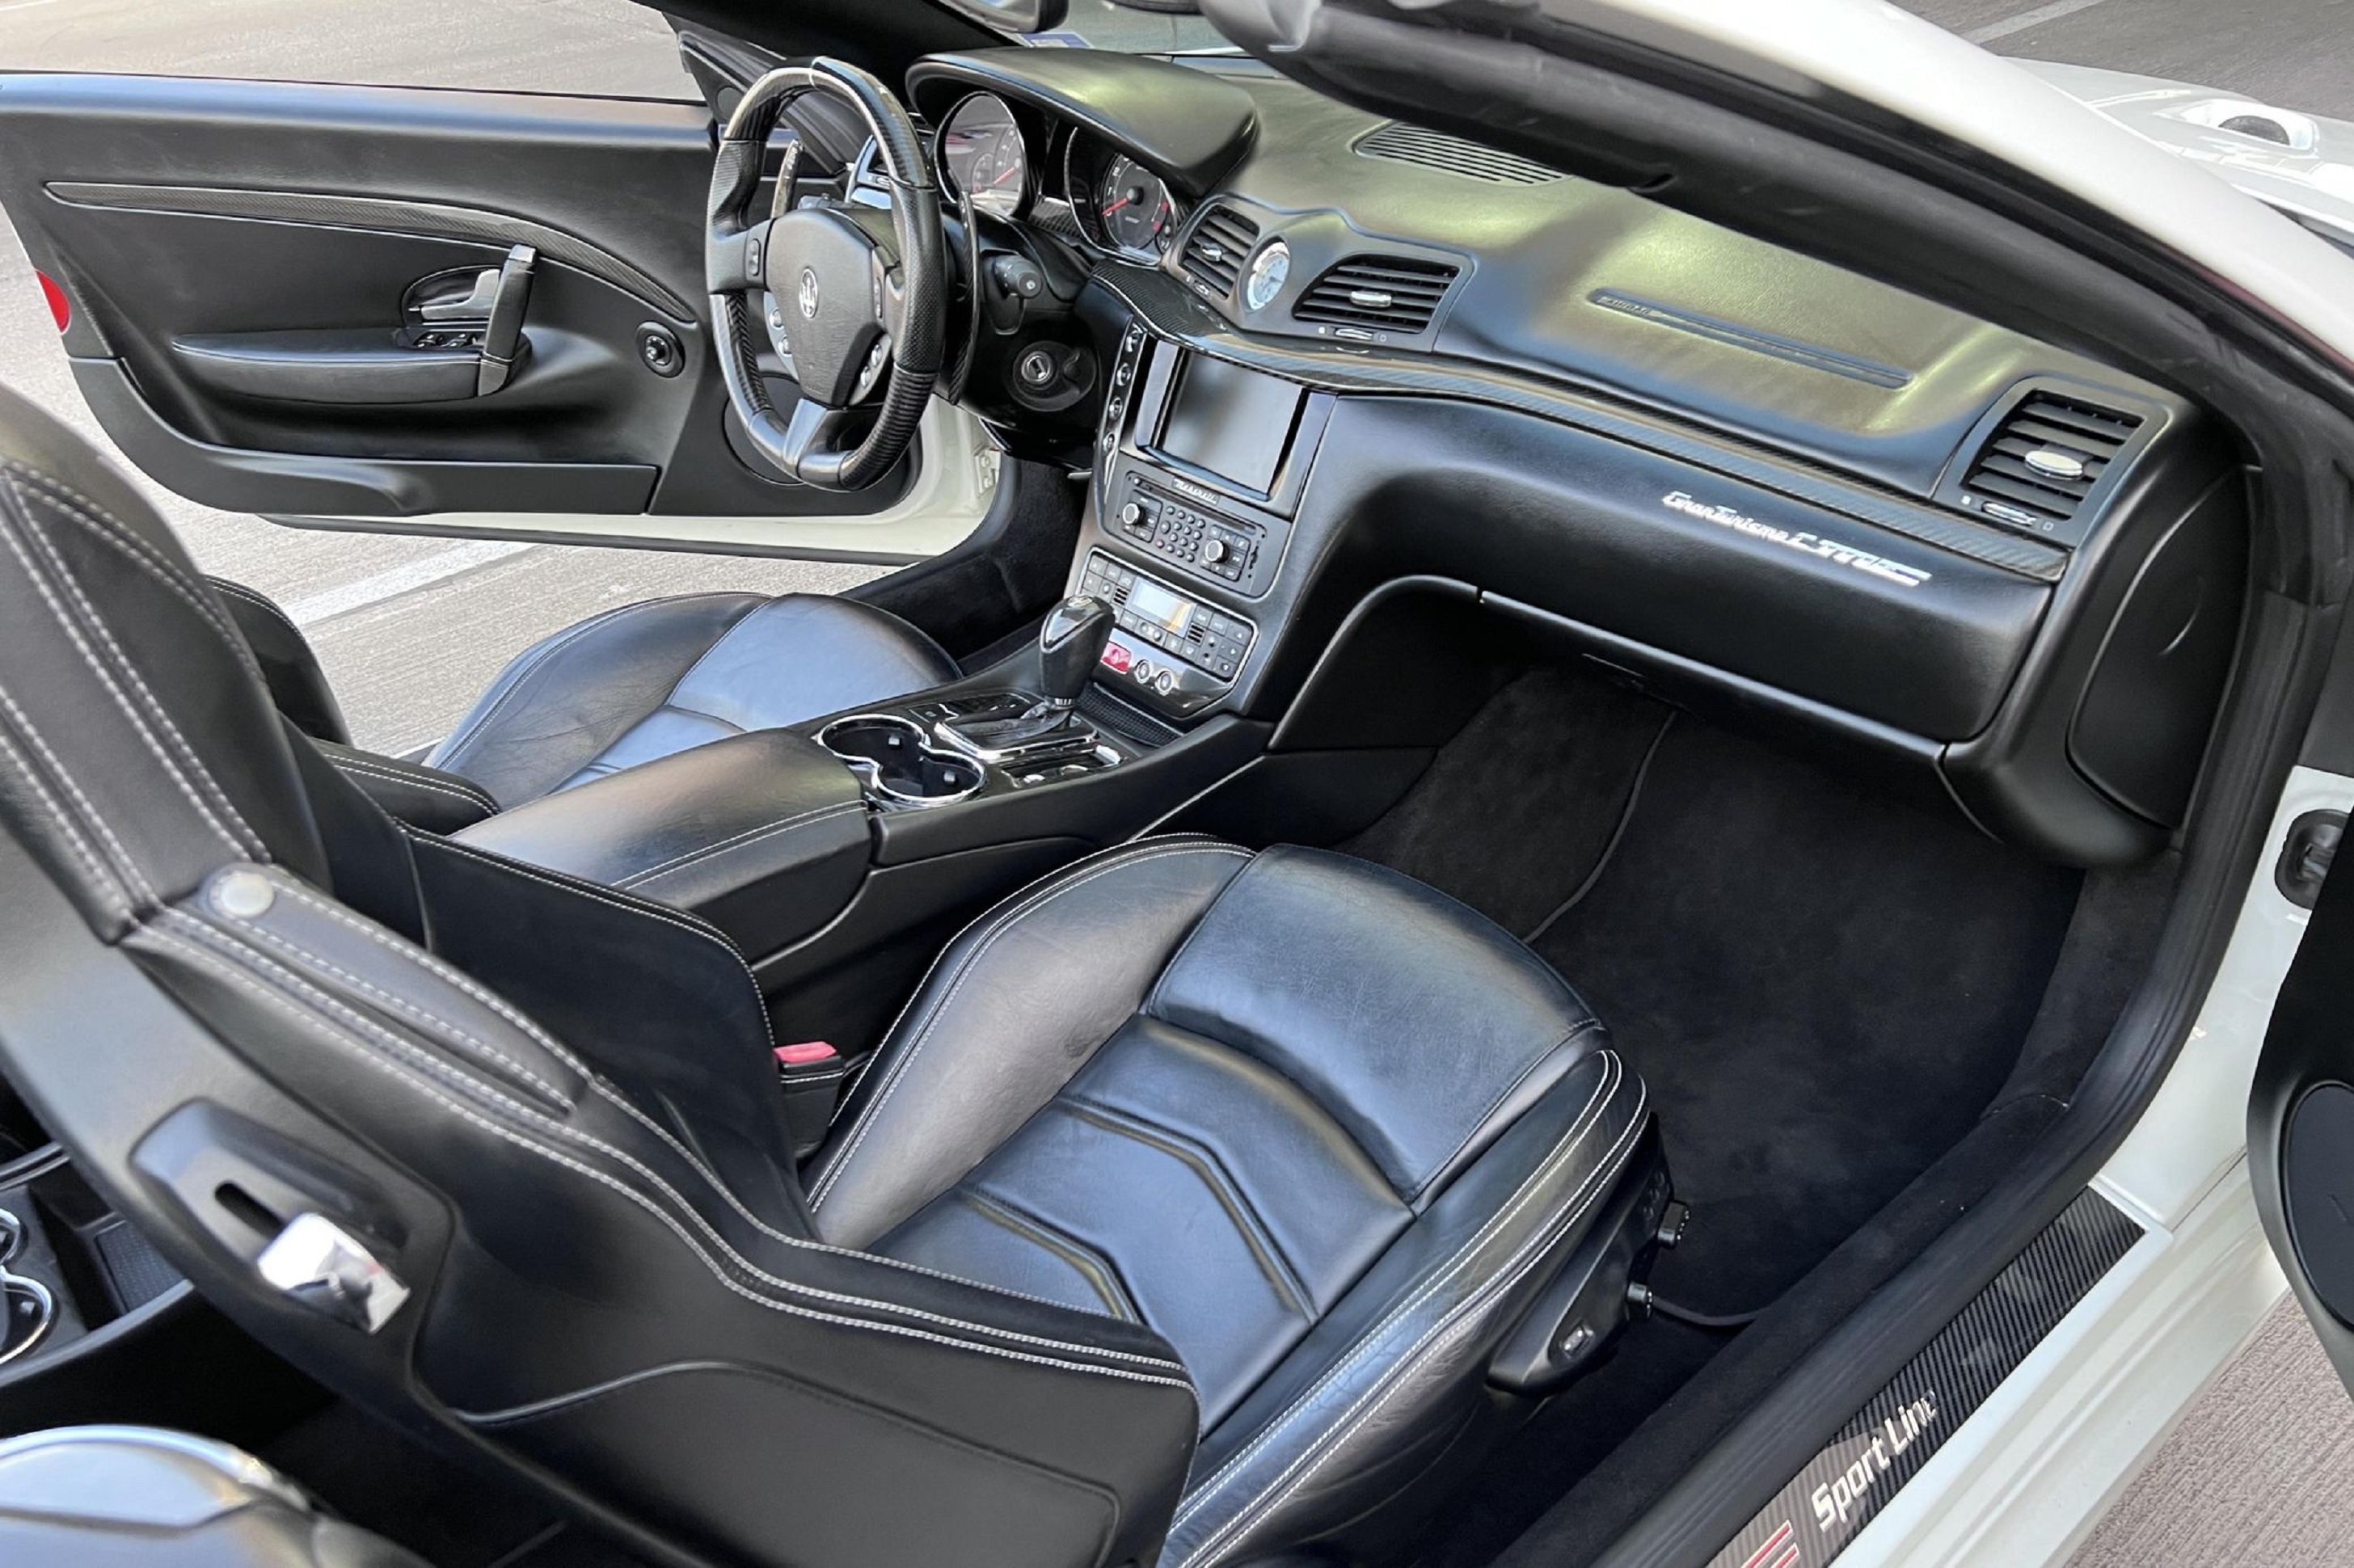 The black-leather seats and carbon-fiber-trimmed black dashboard of a white 2013 Maserati GranTurismo MC Convertible